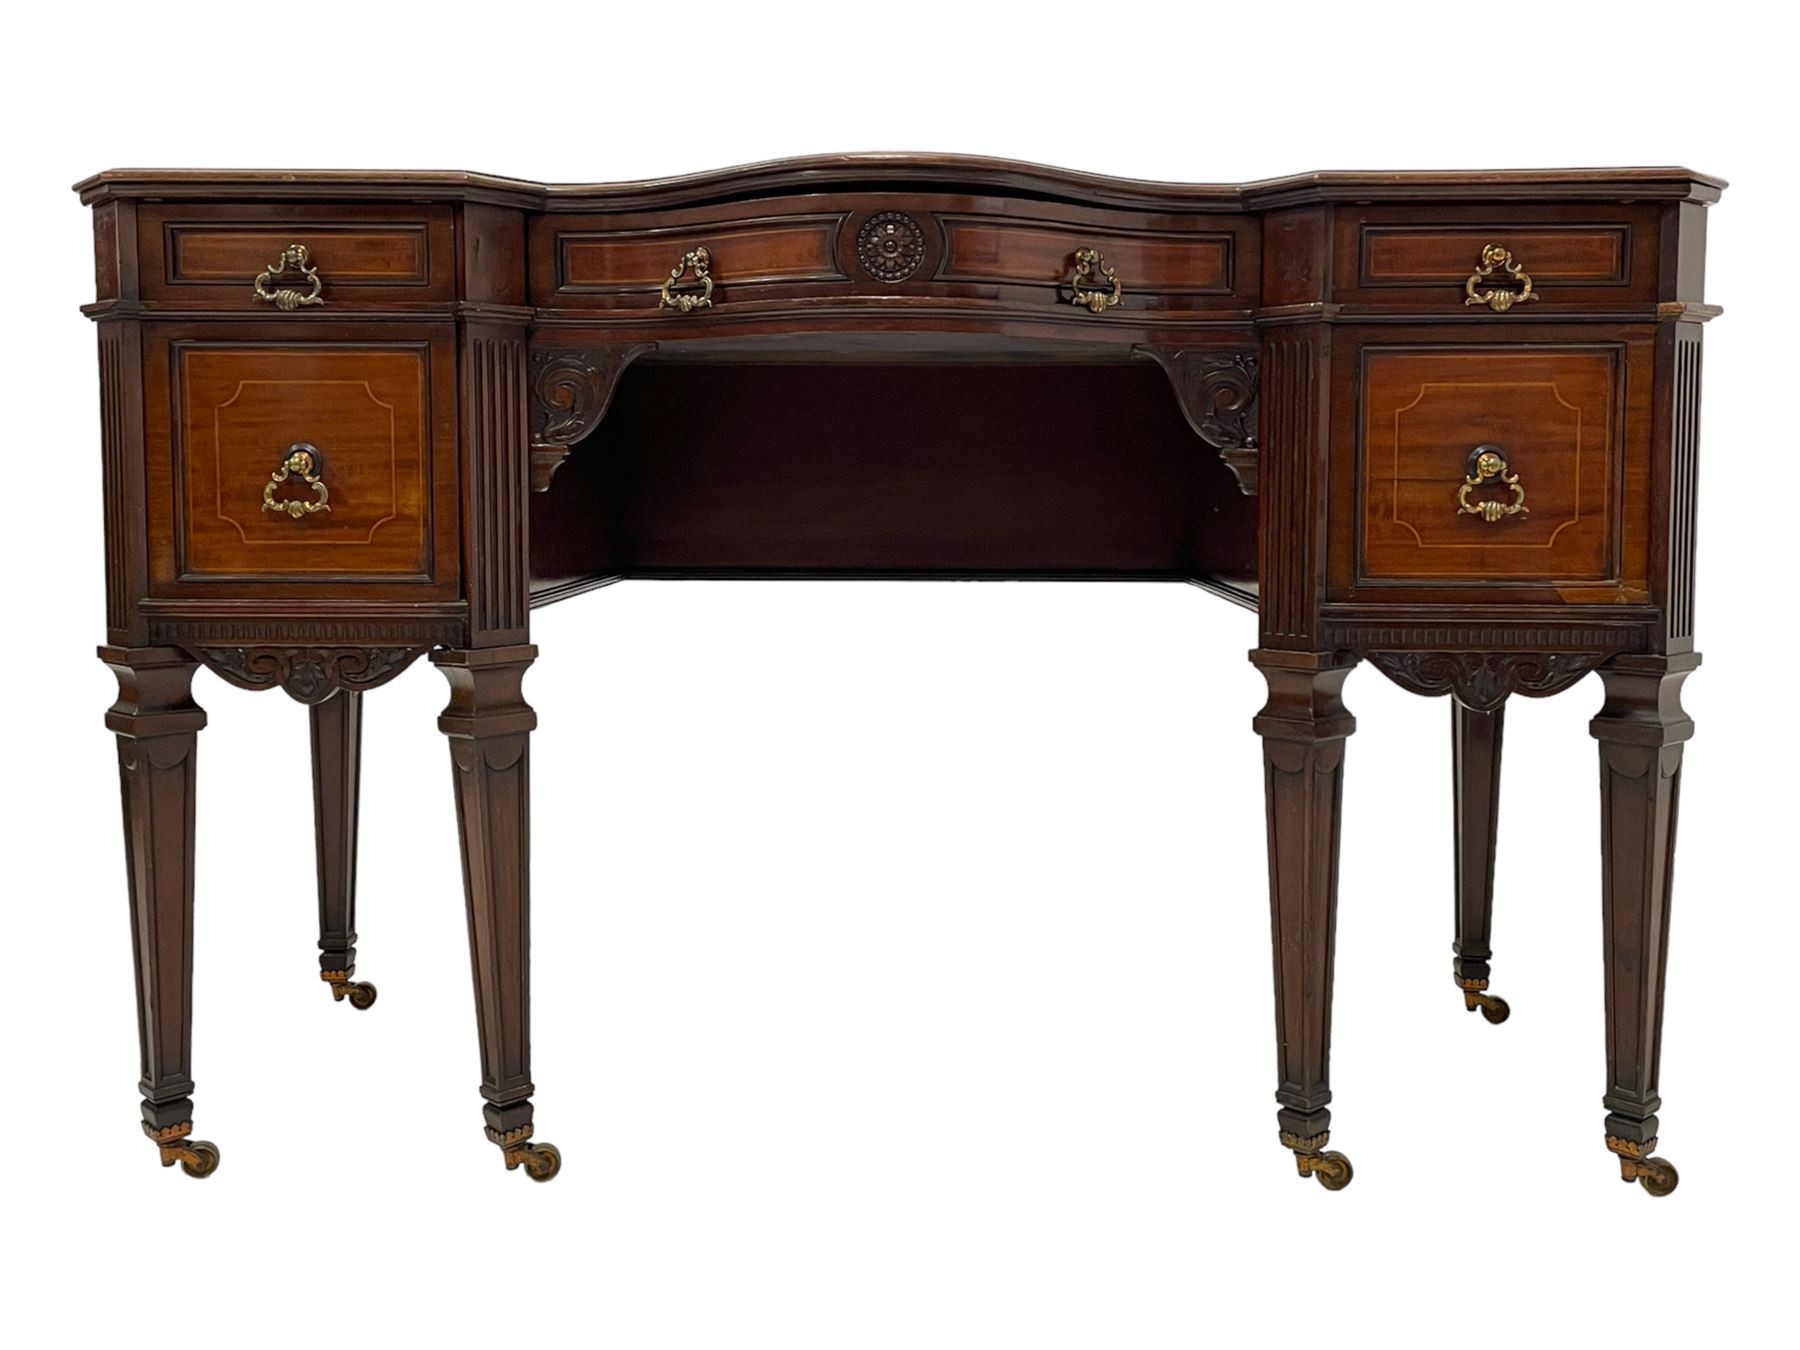 Late 19th century mahogany writing desk - Image 16 of 18